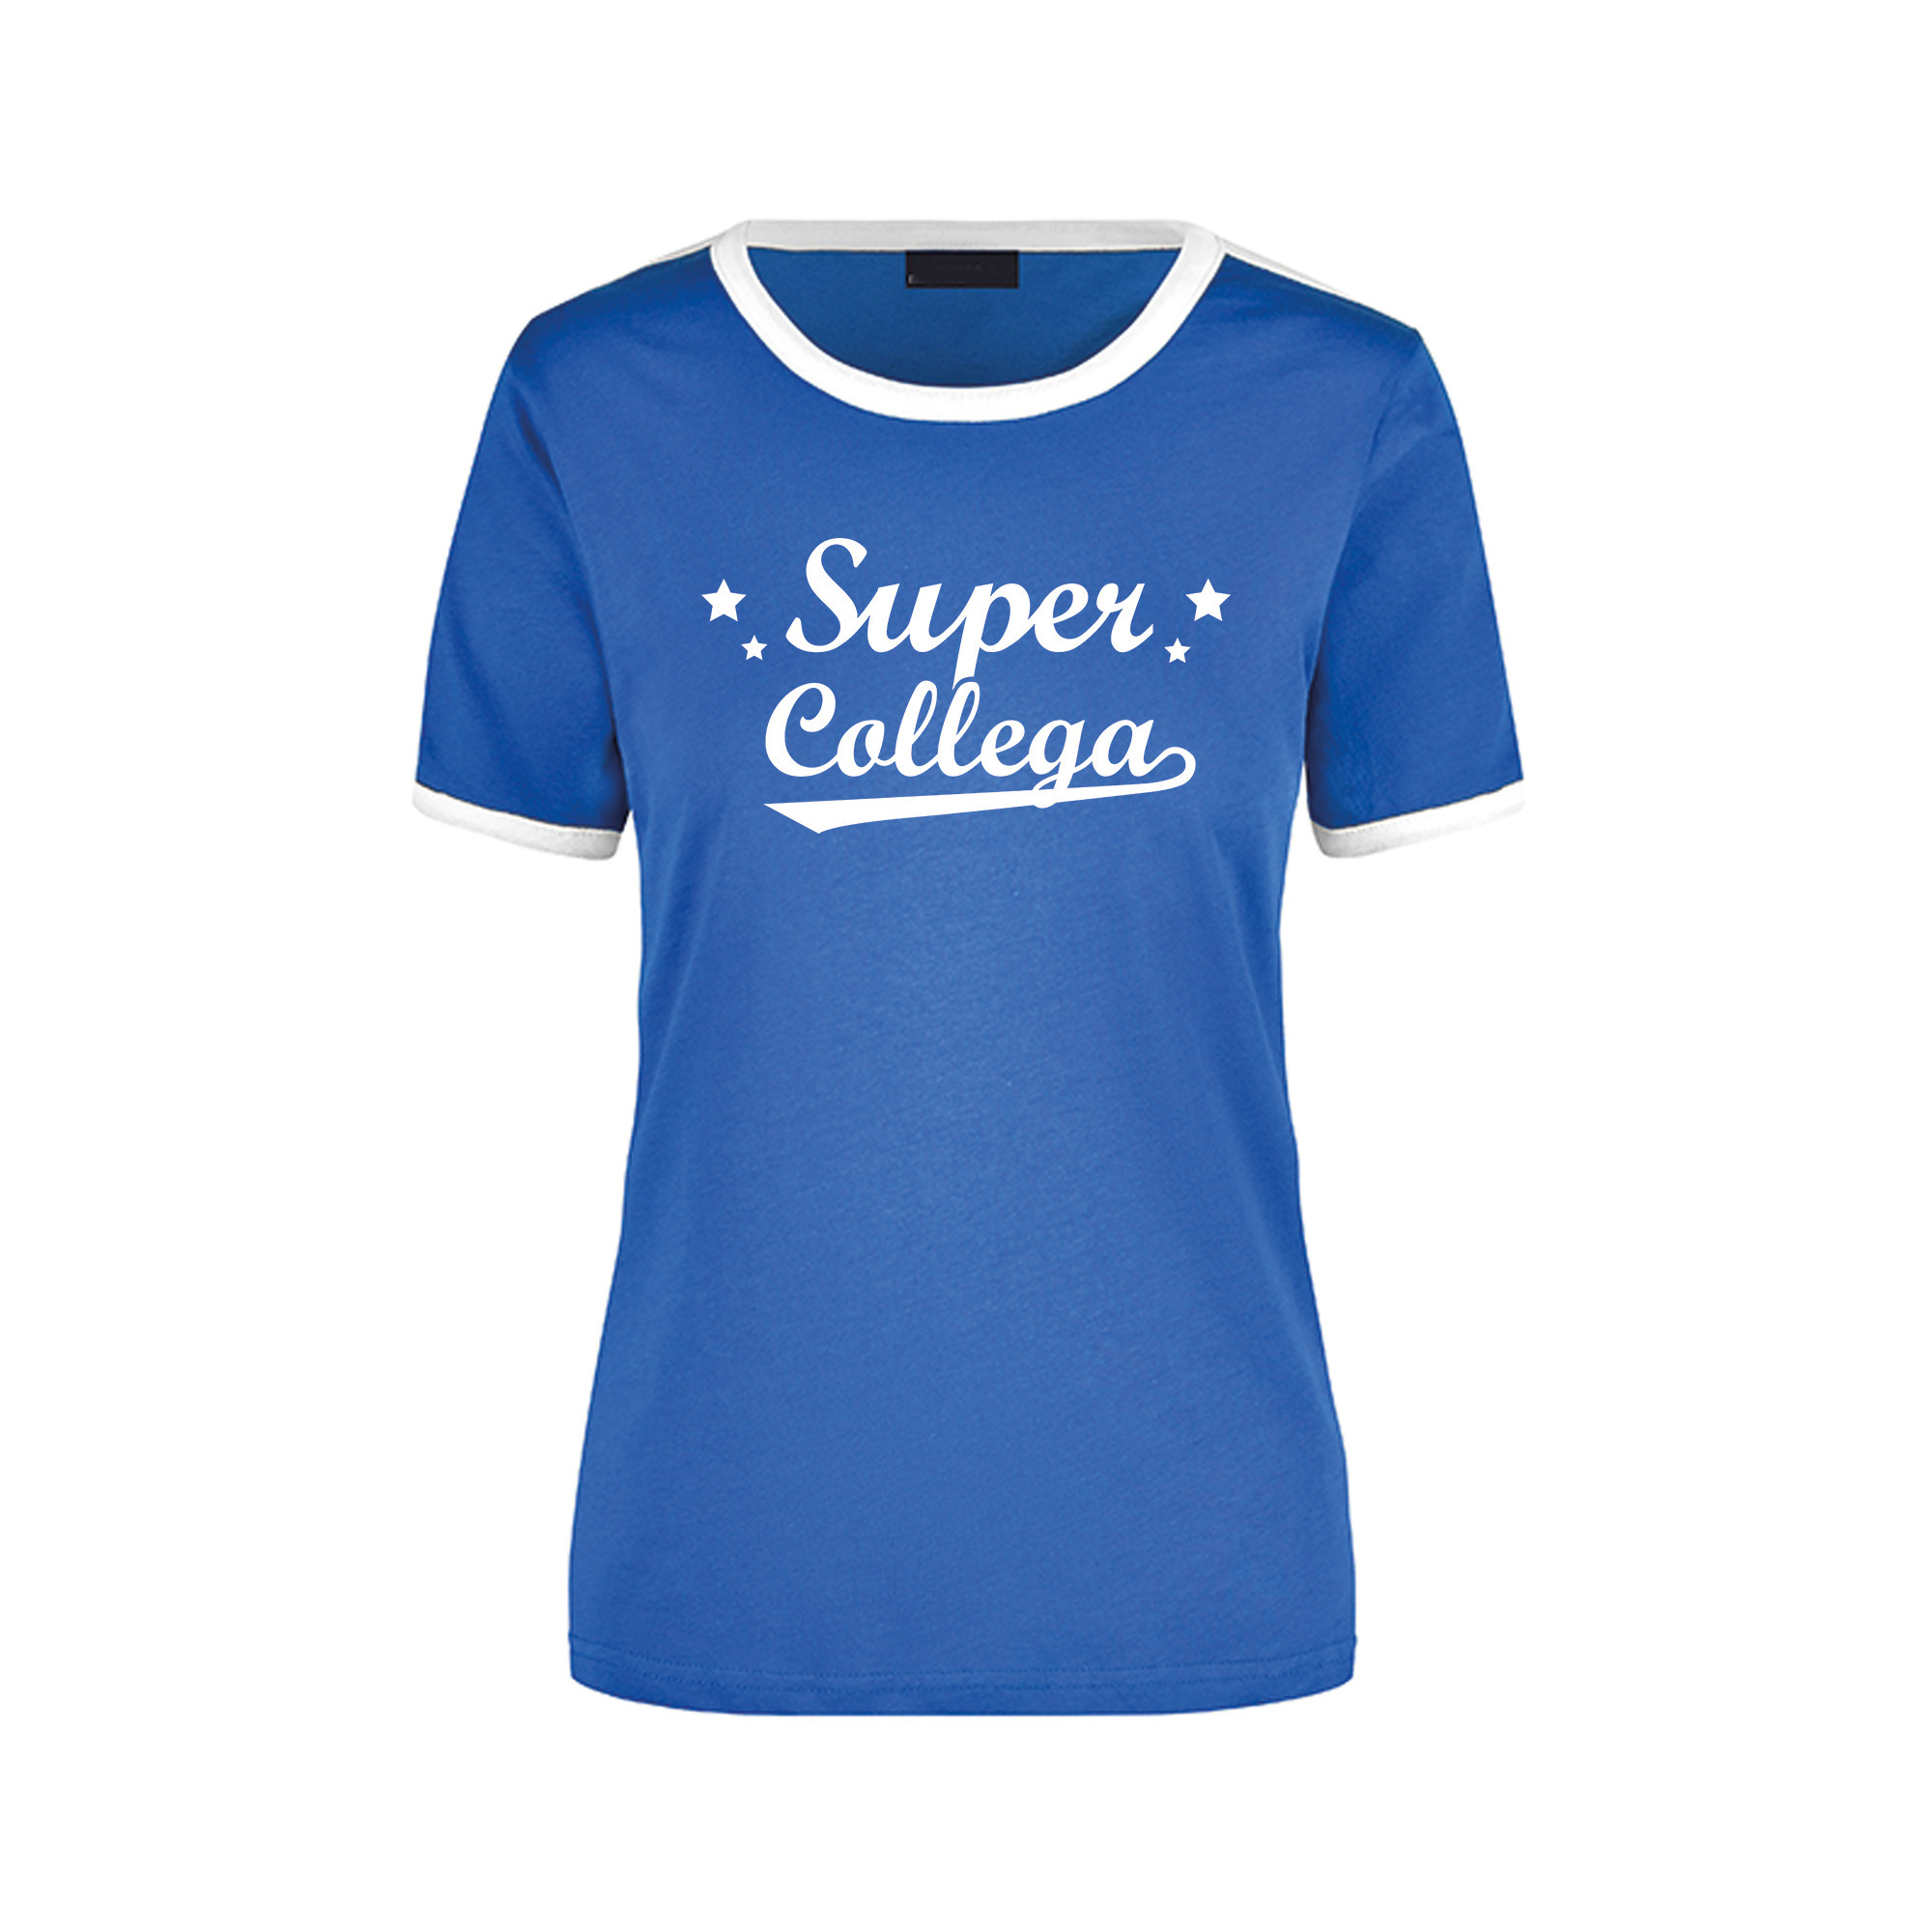 Super collega blauw-wit ringer t-shirt voor dames